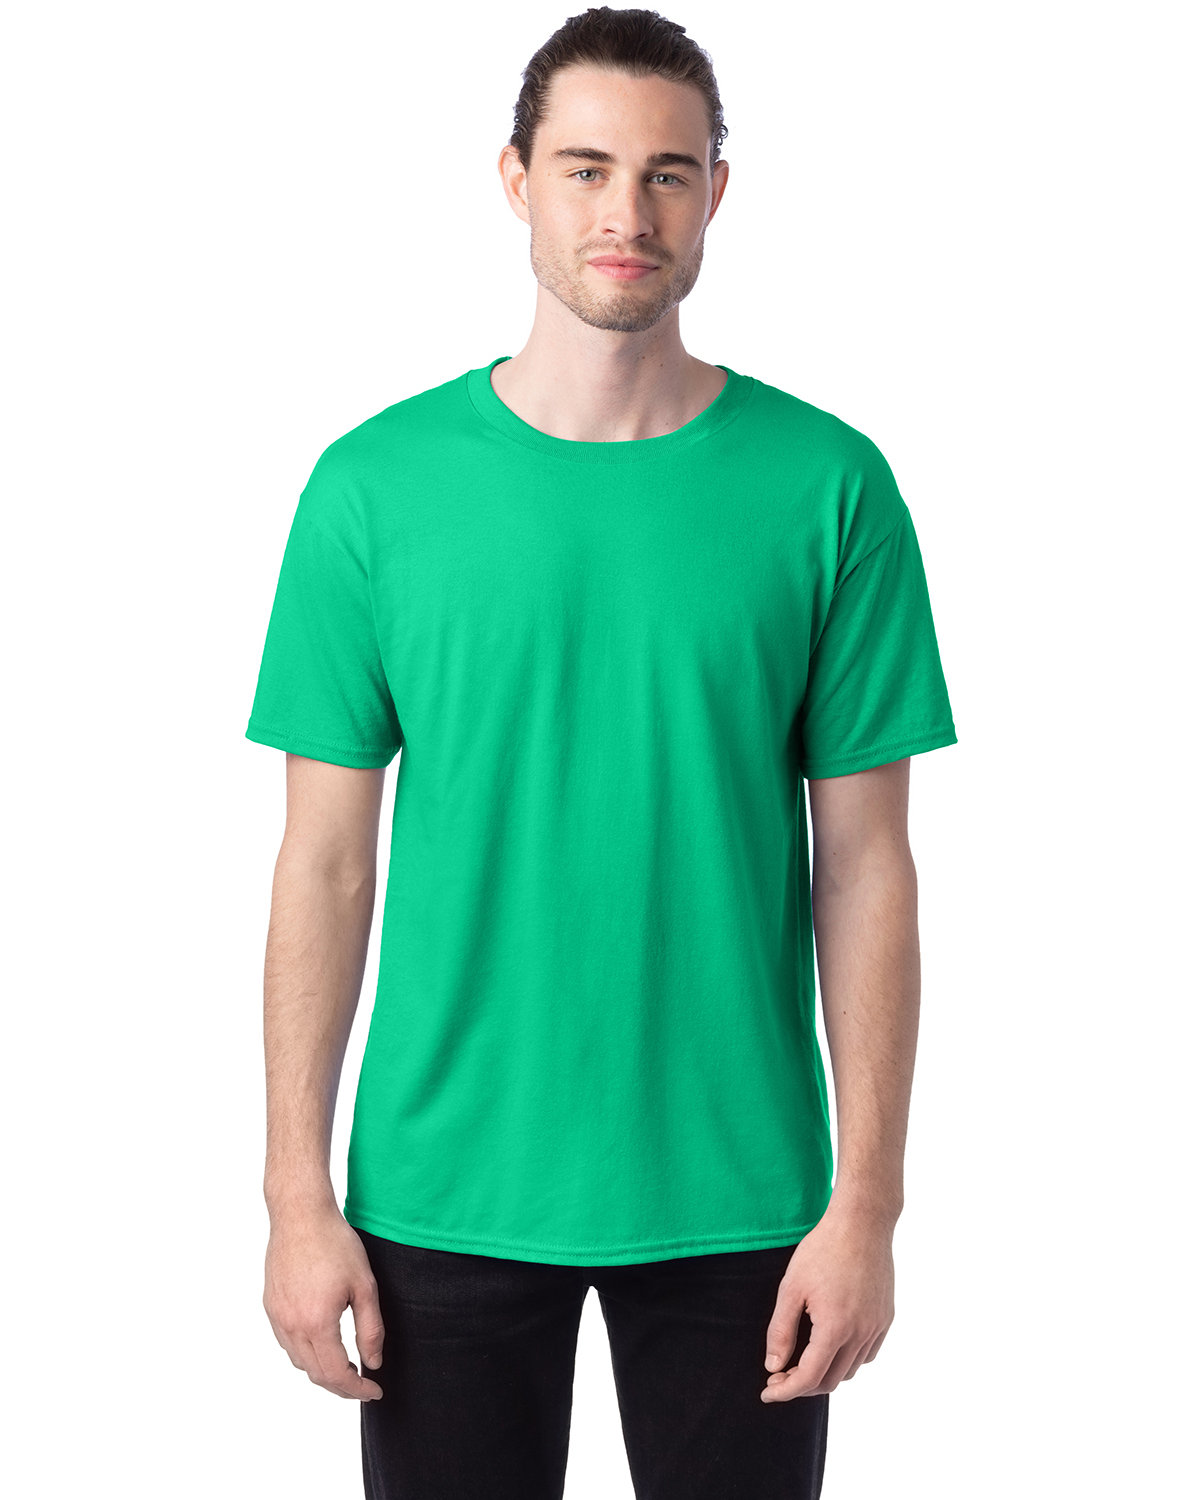 Hanes Unisex 50/50 T-Shirt KELLY GREEN 